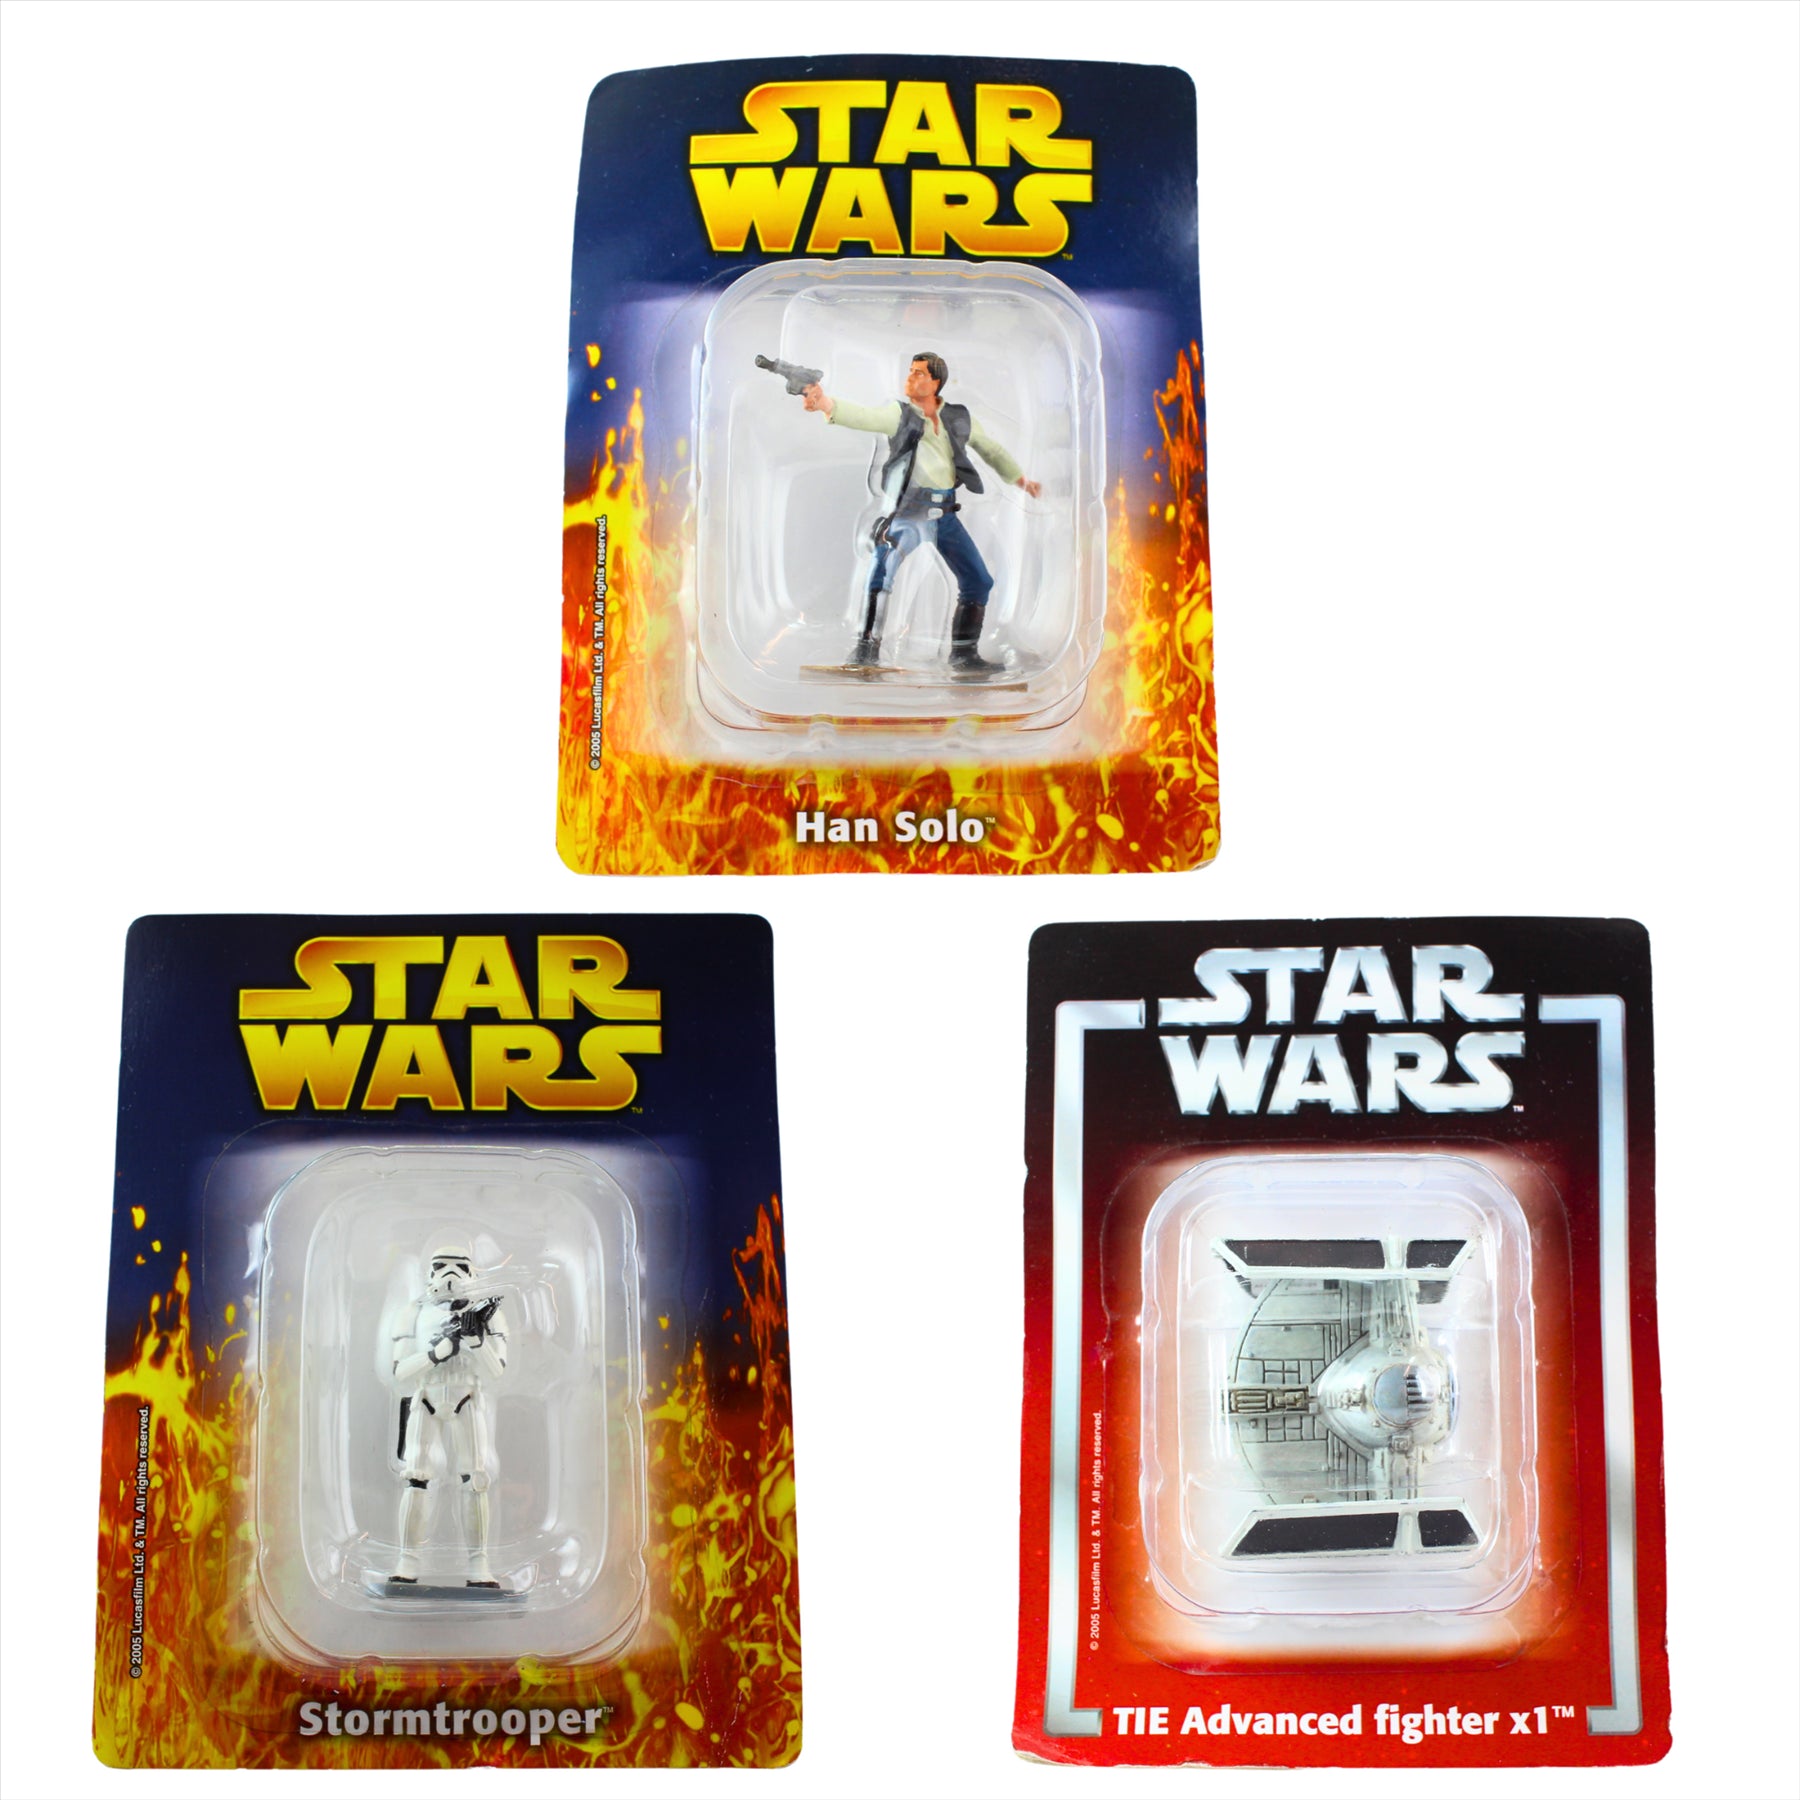 Star Wars Han Solo, Stormtrooper, and TIE Advanced fighter x1 DeAgostini Vintage 6-8cm Diecast Figures - Pack of 3 - Toptoys2u